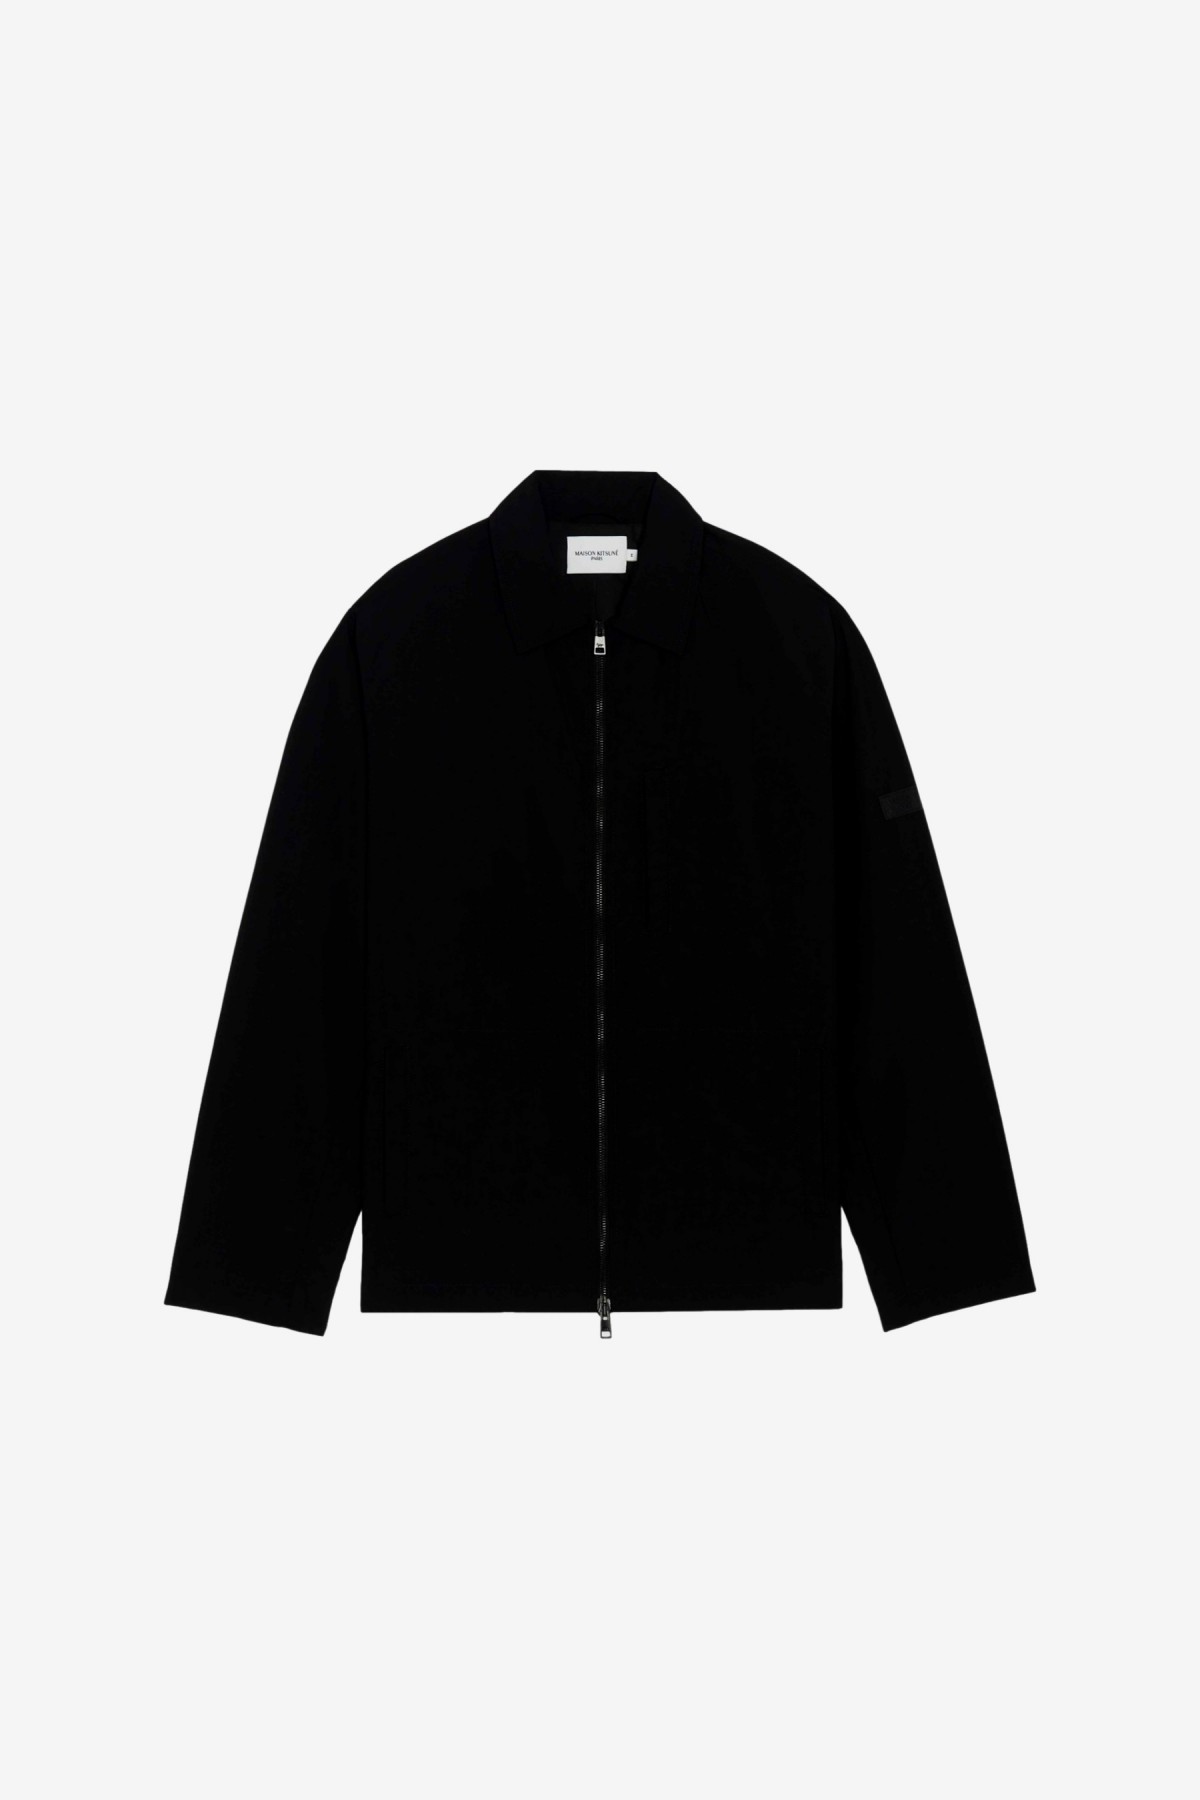 Maison Kitsuné Technical Zipped Overshirt in Black